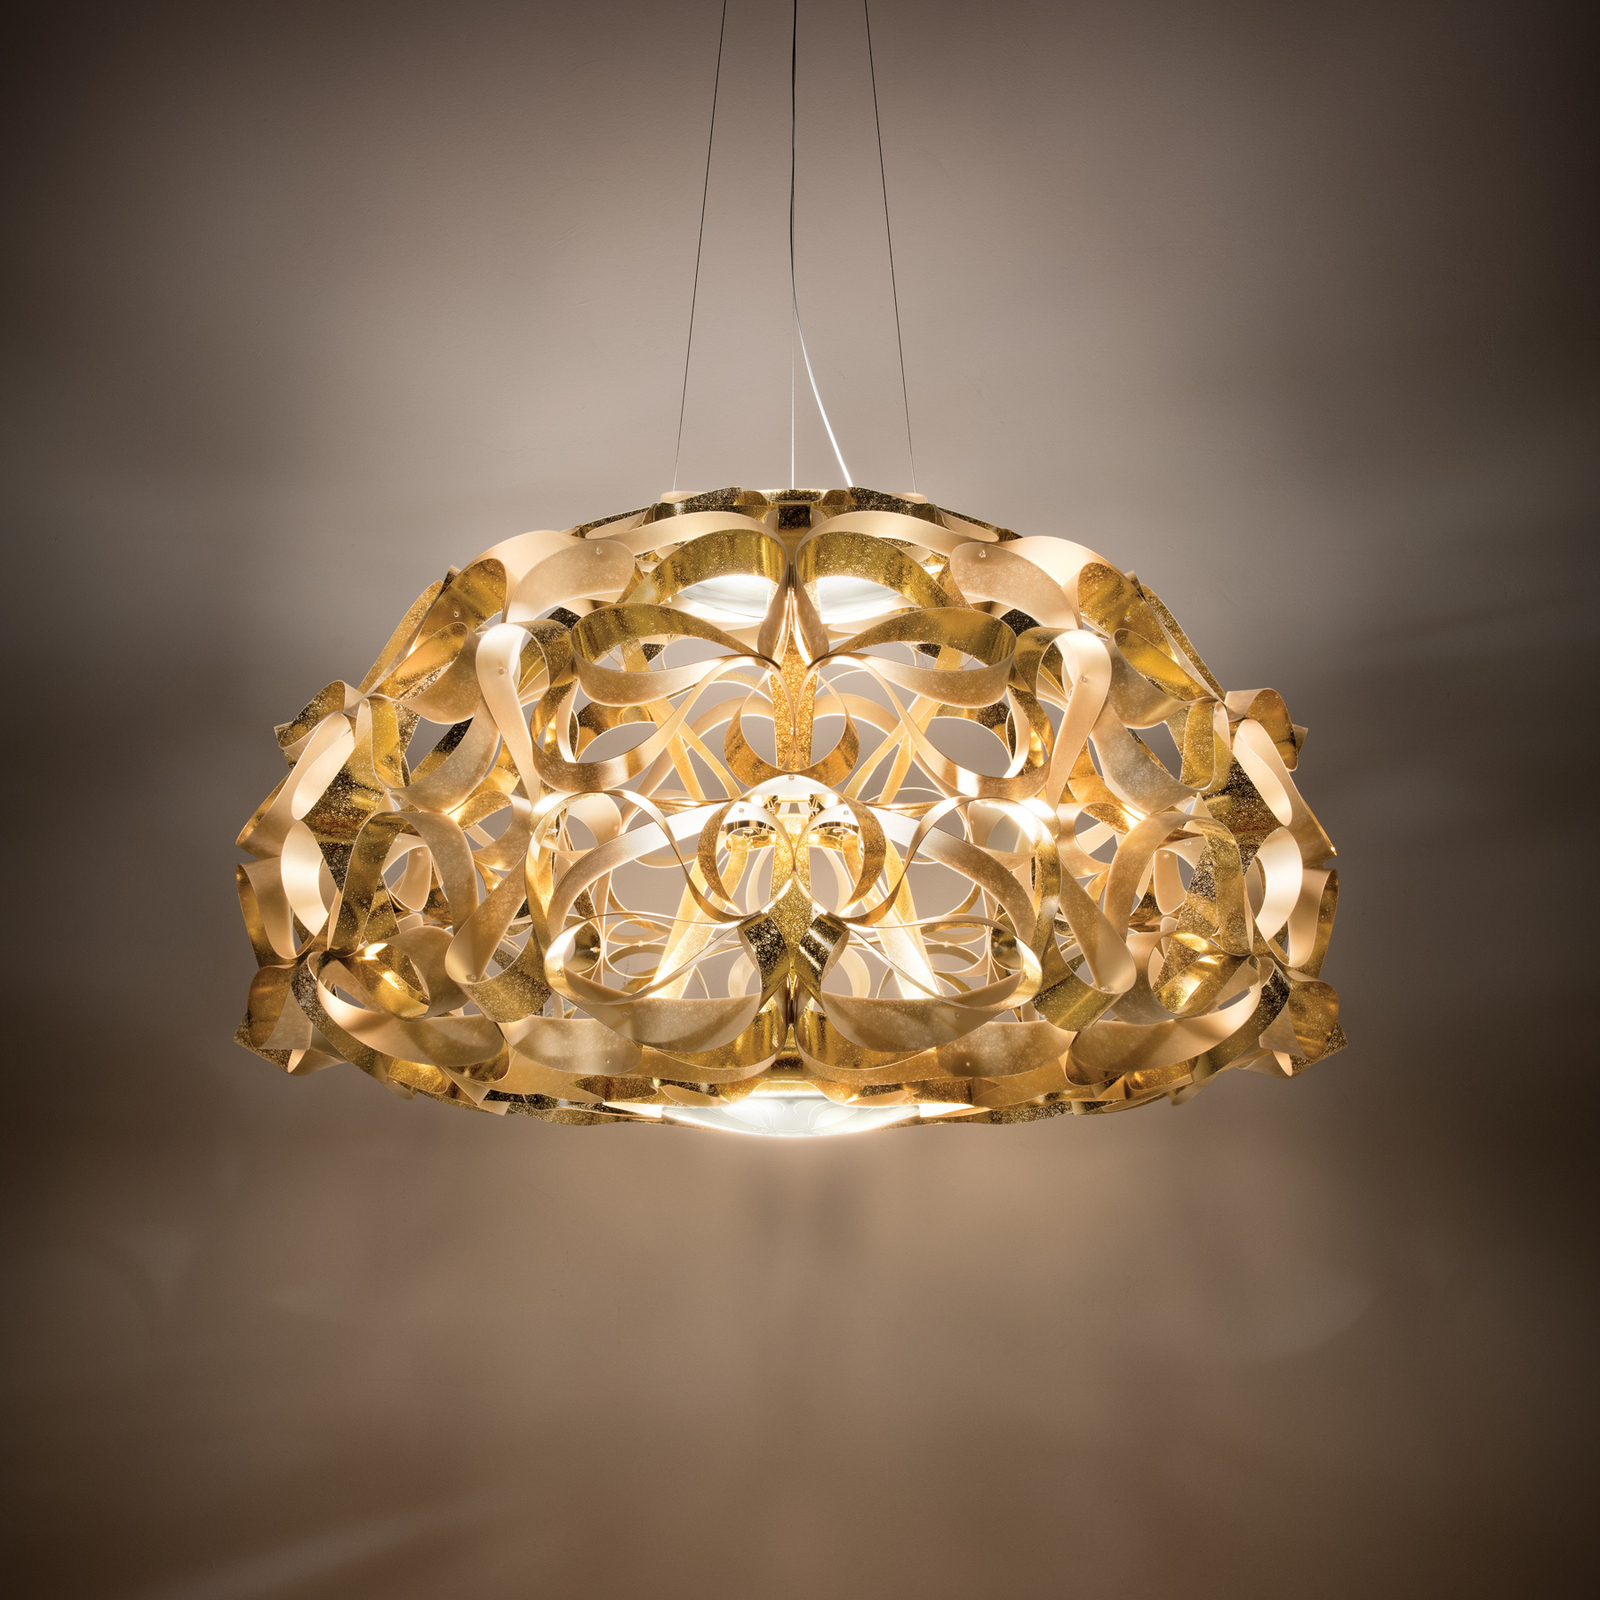 Závěsná lampa Slamp Quantica, zlatá barva, Ø 120 cm